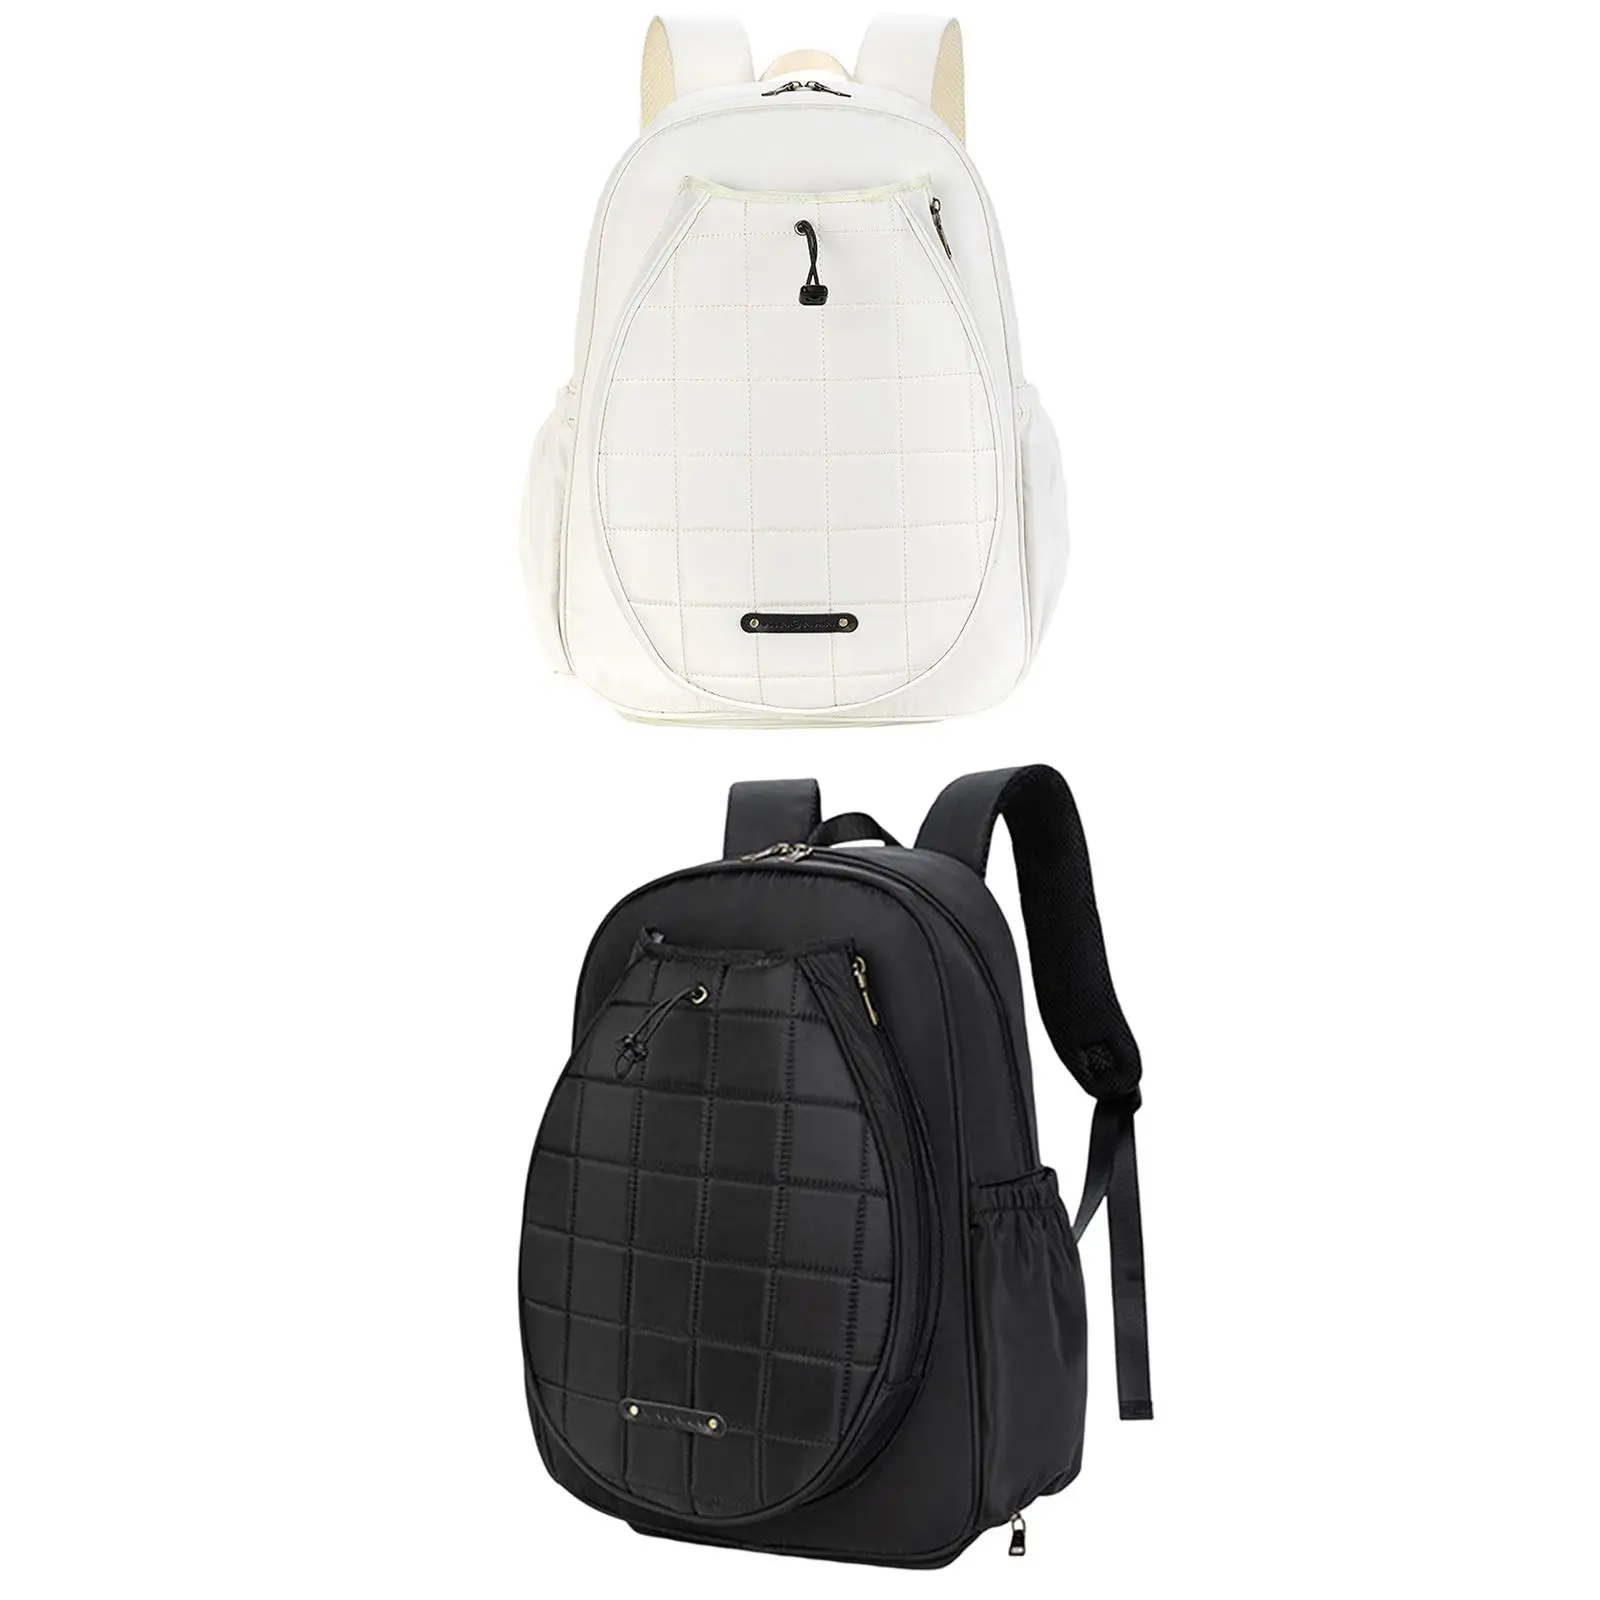 Tennis Backpack Tennis Bag Outdoor Sport Bag Large Capacity Racket Bag Racquet Cover for Tennis Racket Balls Accessories